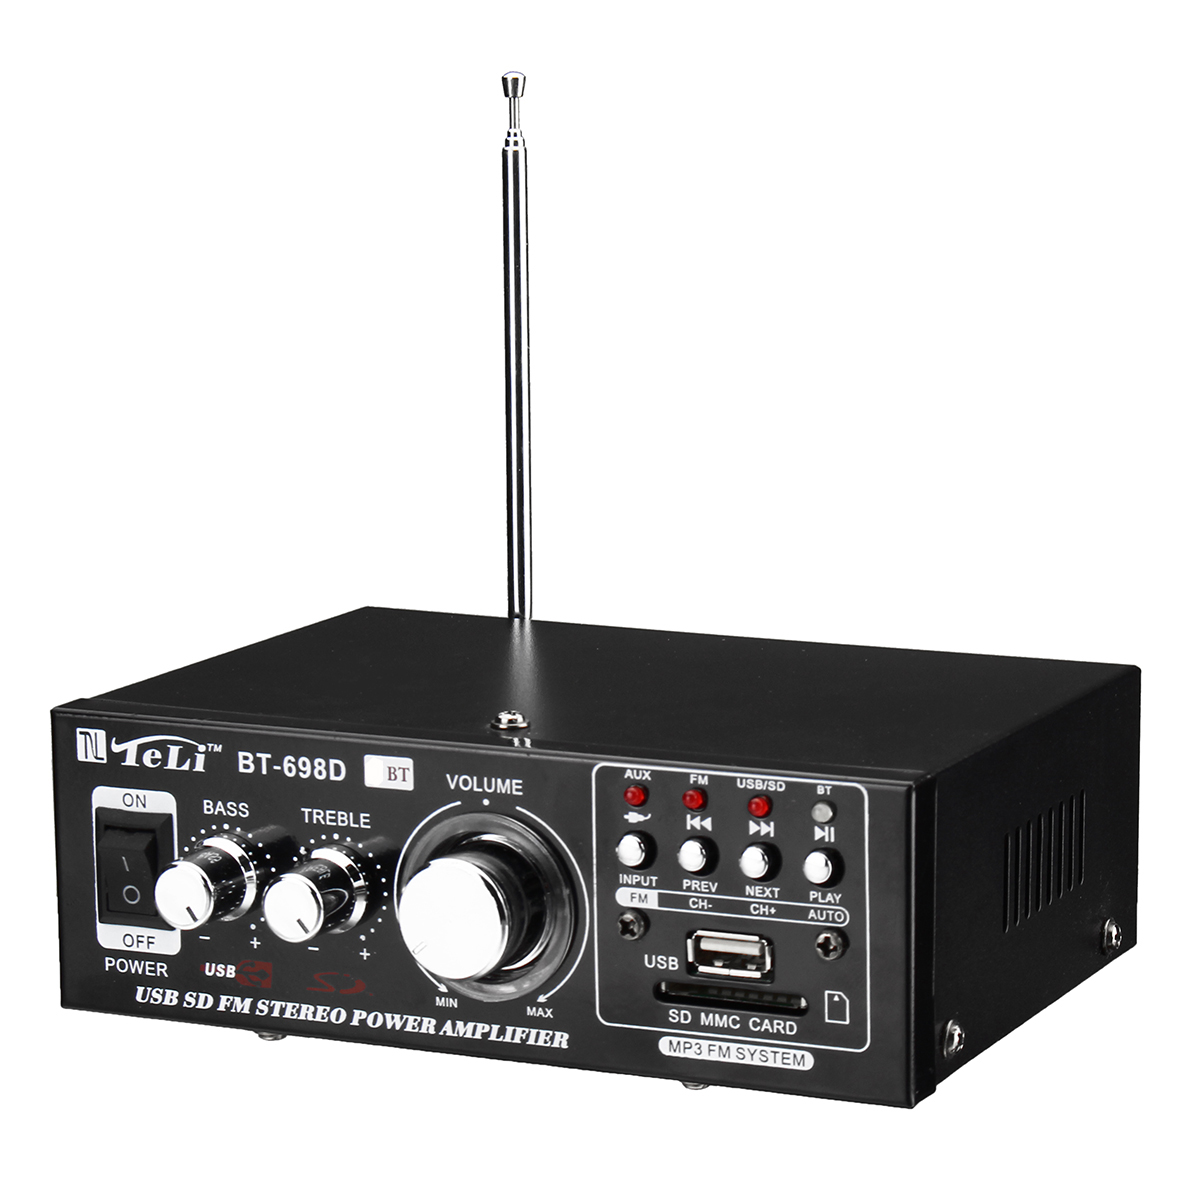 USB-SD-HIFI-Power-Amplifier-HiFi-Digital-Audio-Stereo-Amplifier-bluetooth-FM-Radio-Equipment-1423186-9